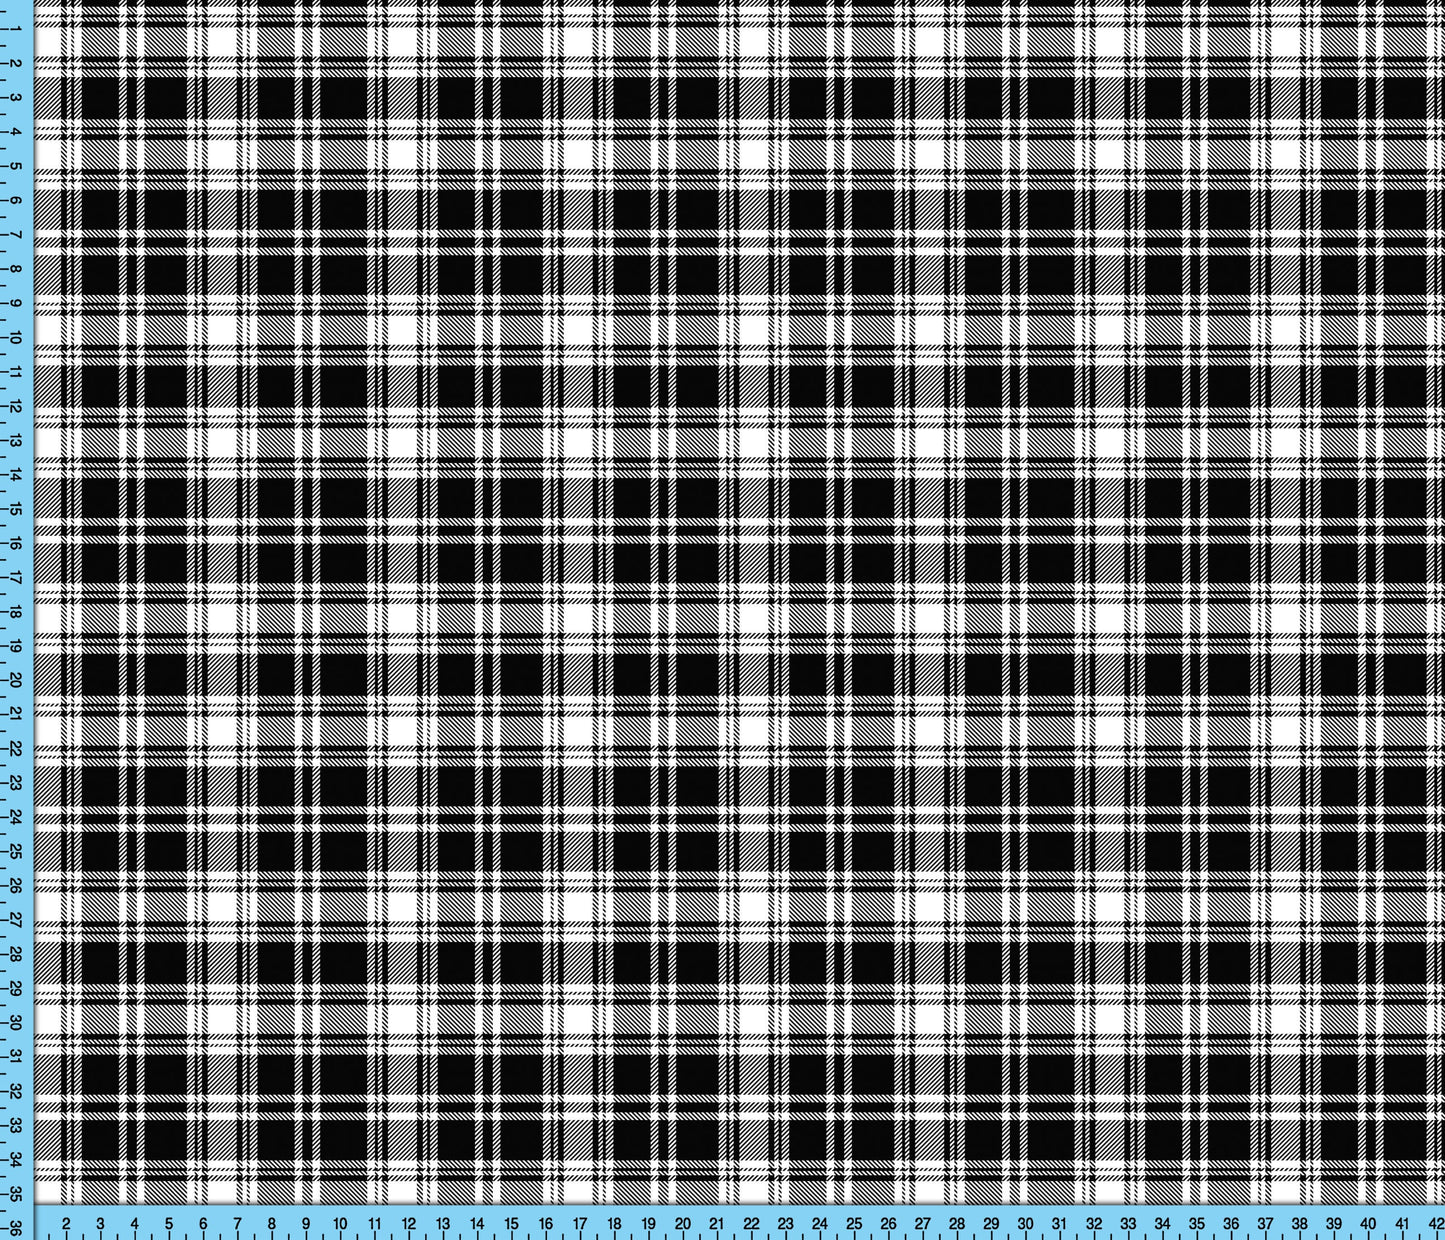 Black White Plaid Print Fabric, Checkered Tartan Lumberjack Plaid Pattern Design Fabric By The Yard